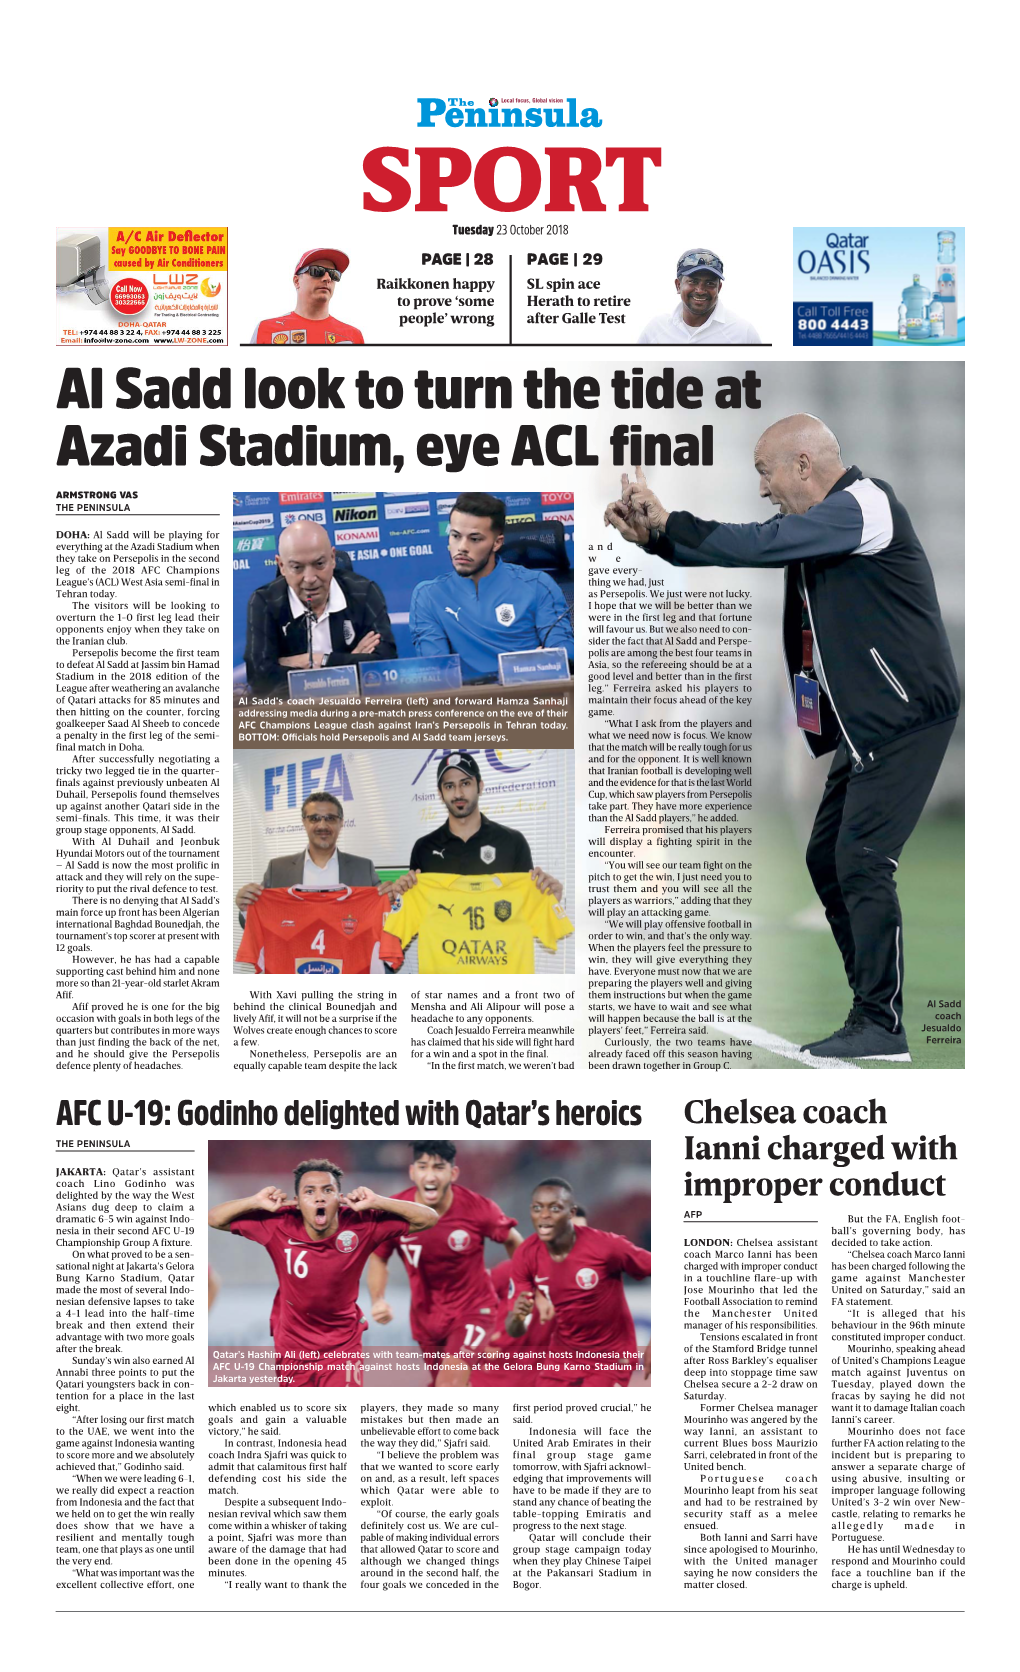 Al Sadd Look to Turn the Tide at Azadi Stadium, Eye ACL Final